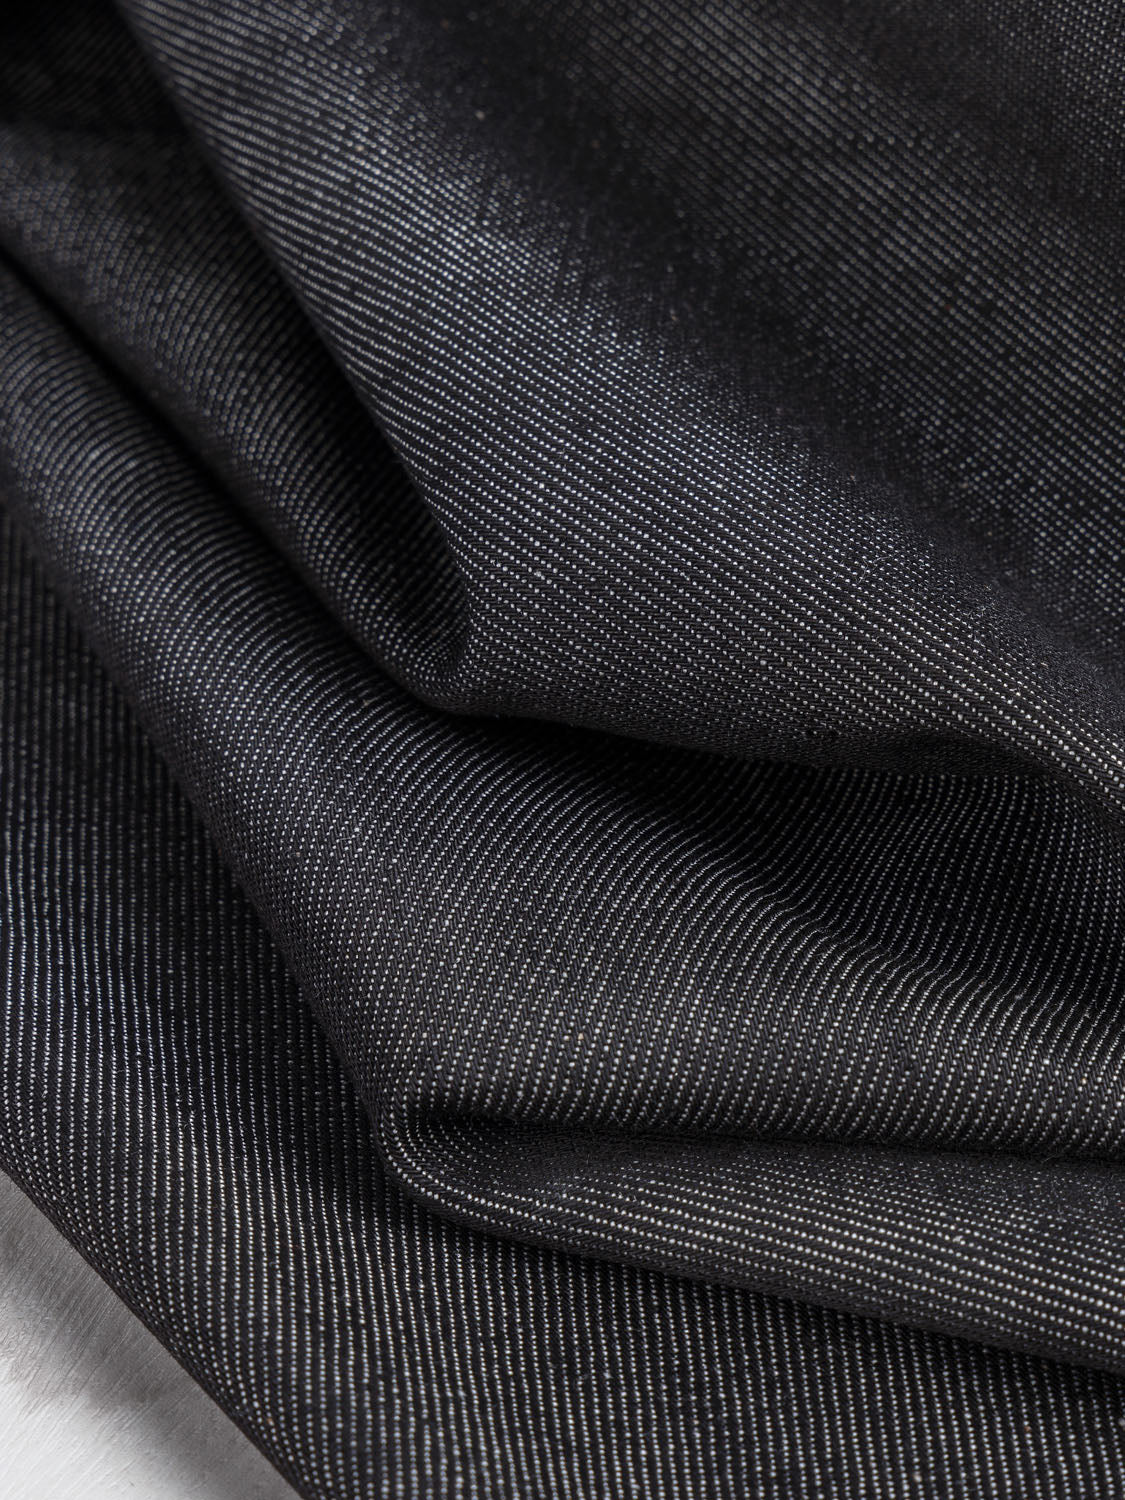 Denim – Core Fabrics